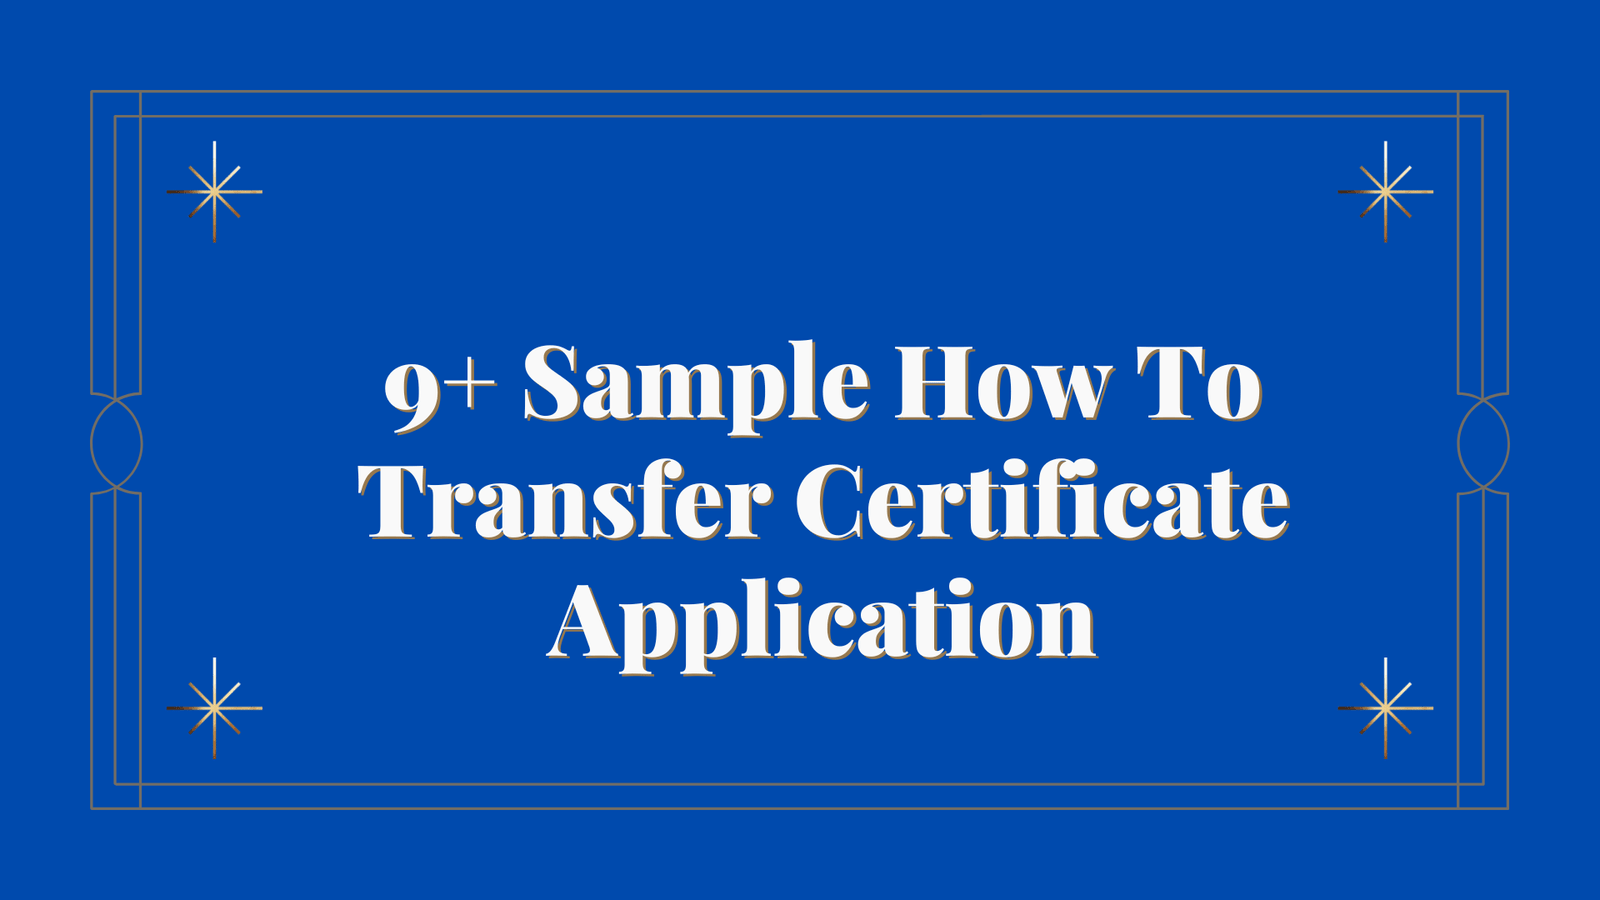 Transfer Certificate Application